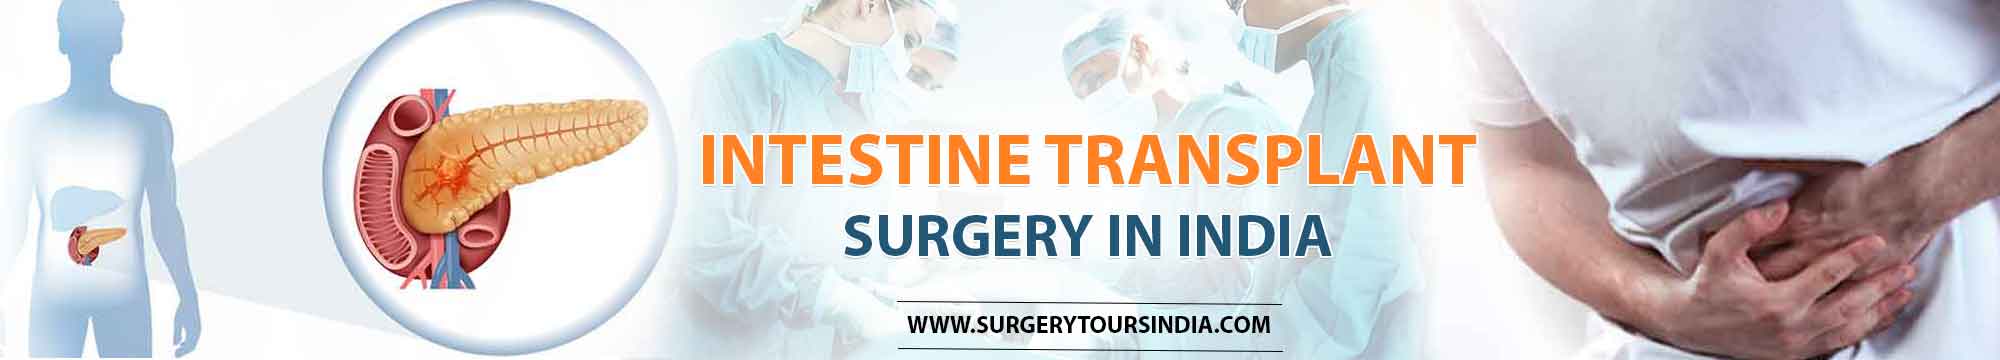 Types of Intestine Transplant Surgery